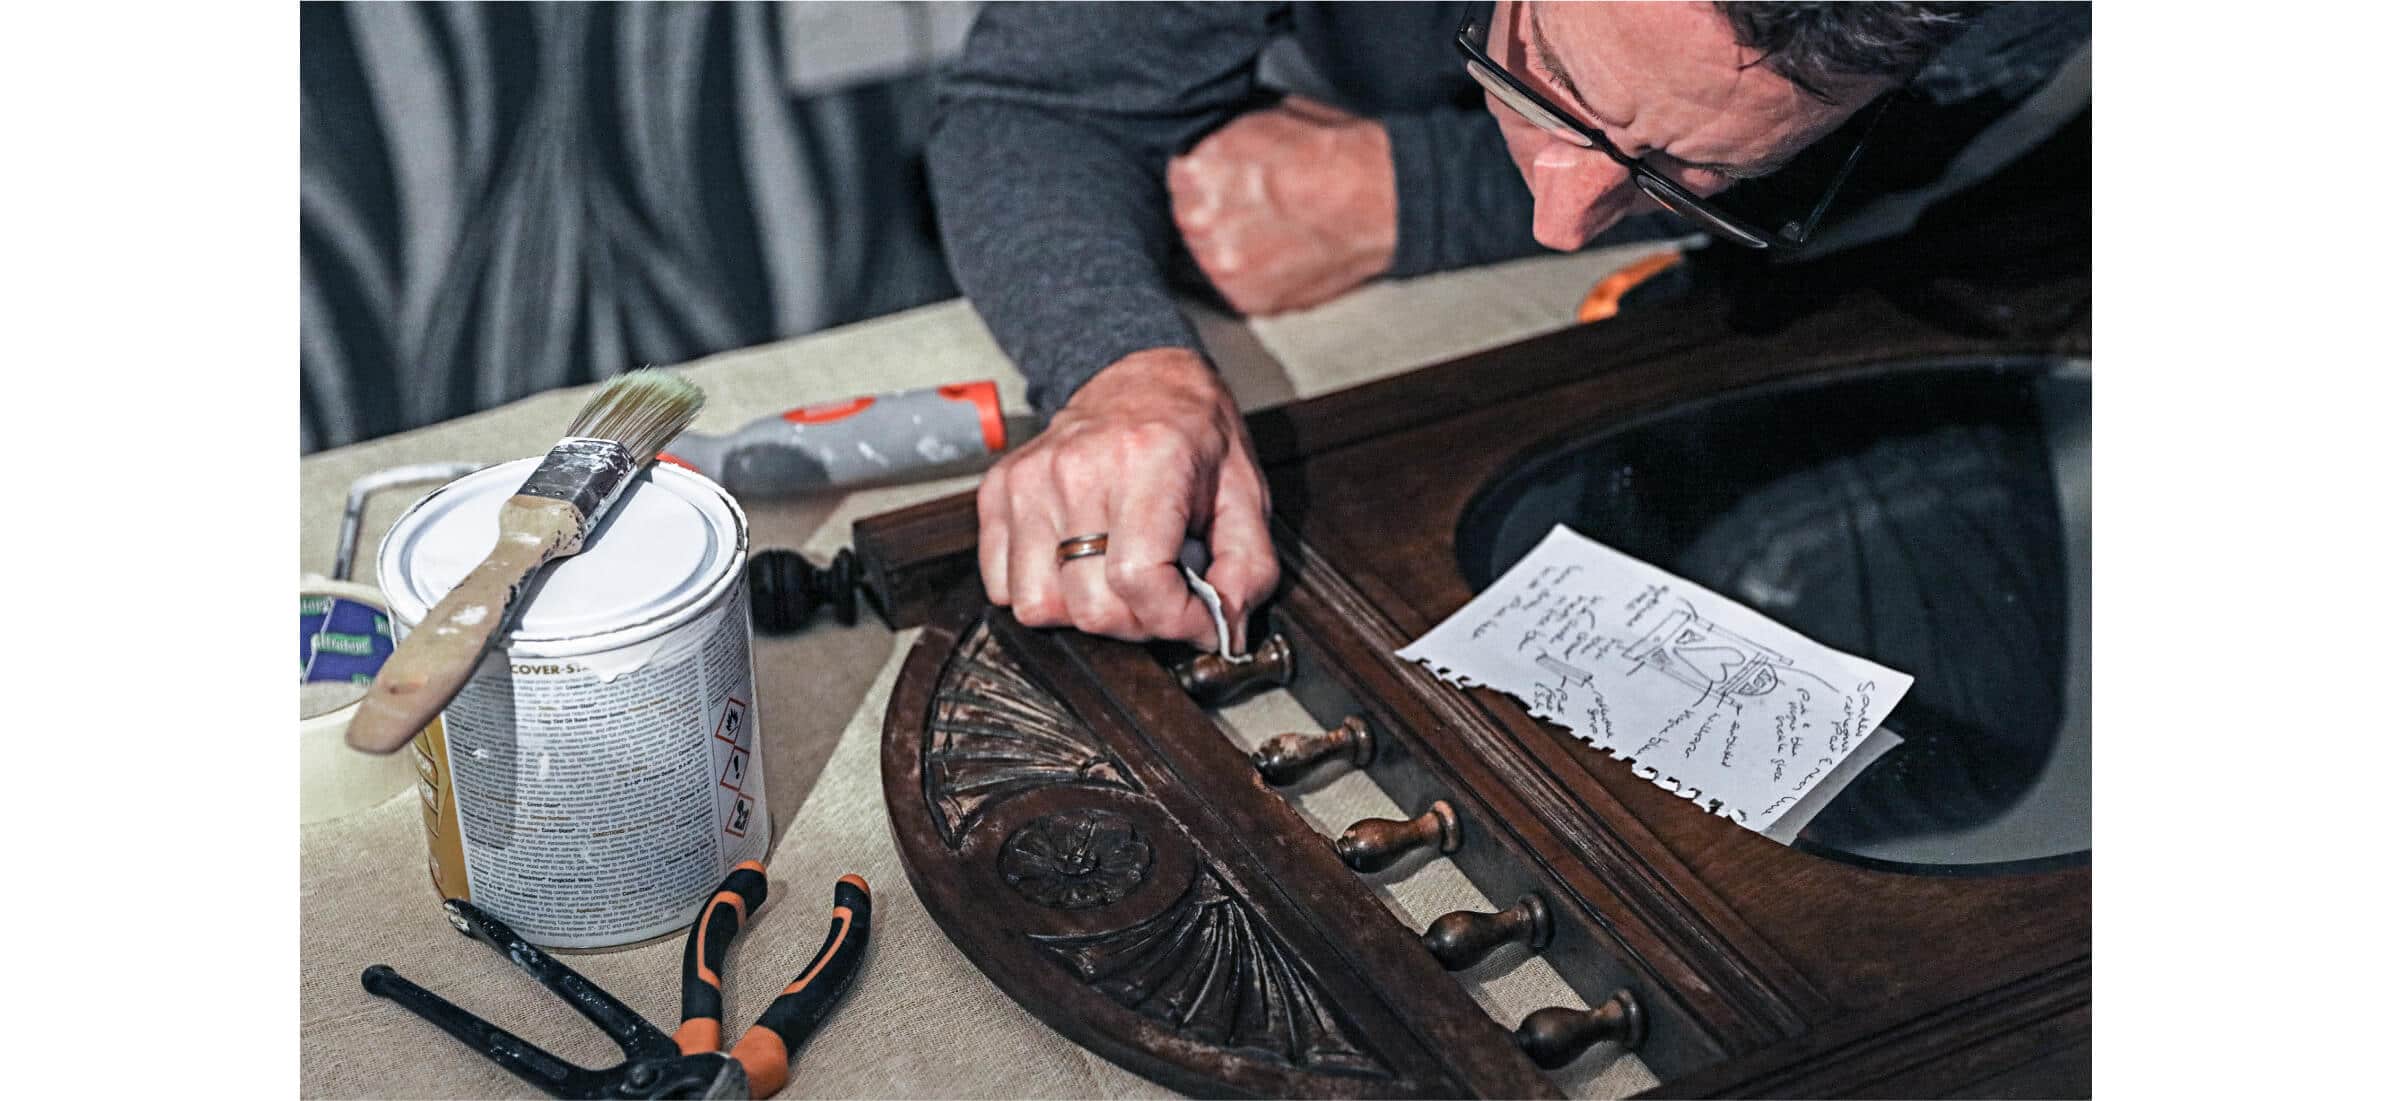 Paul Walden working on restoration of old wooden furniture.